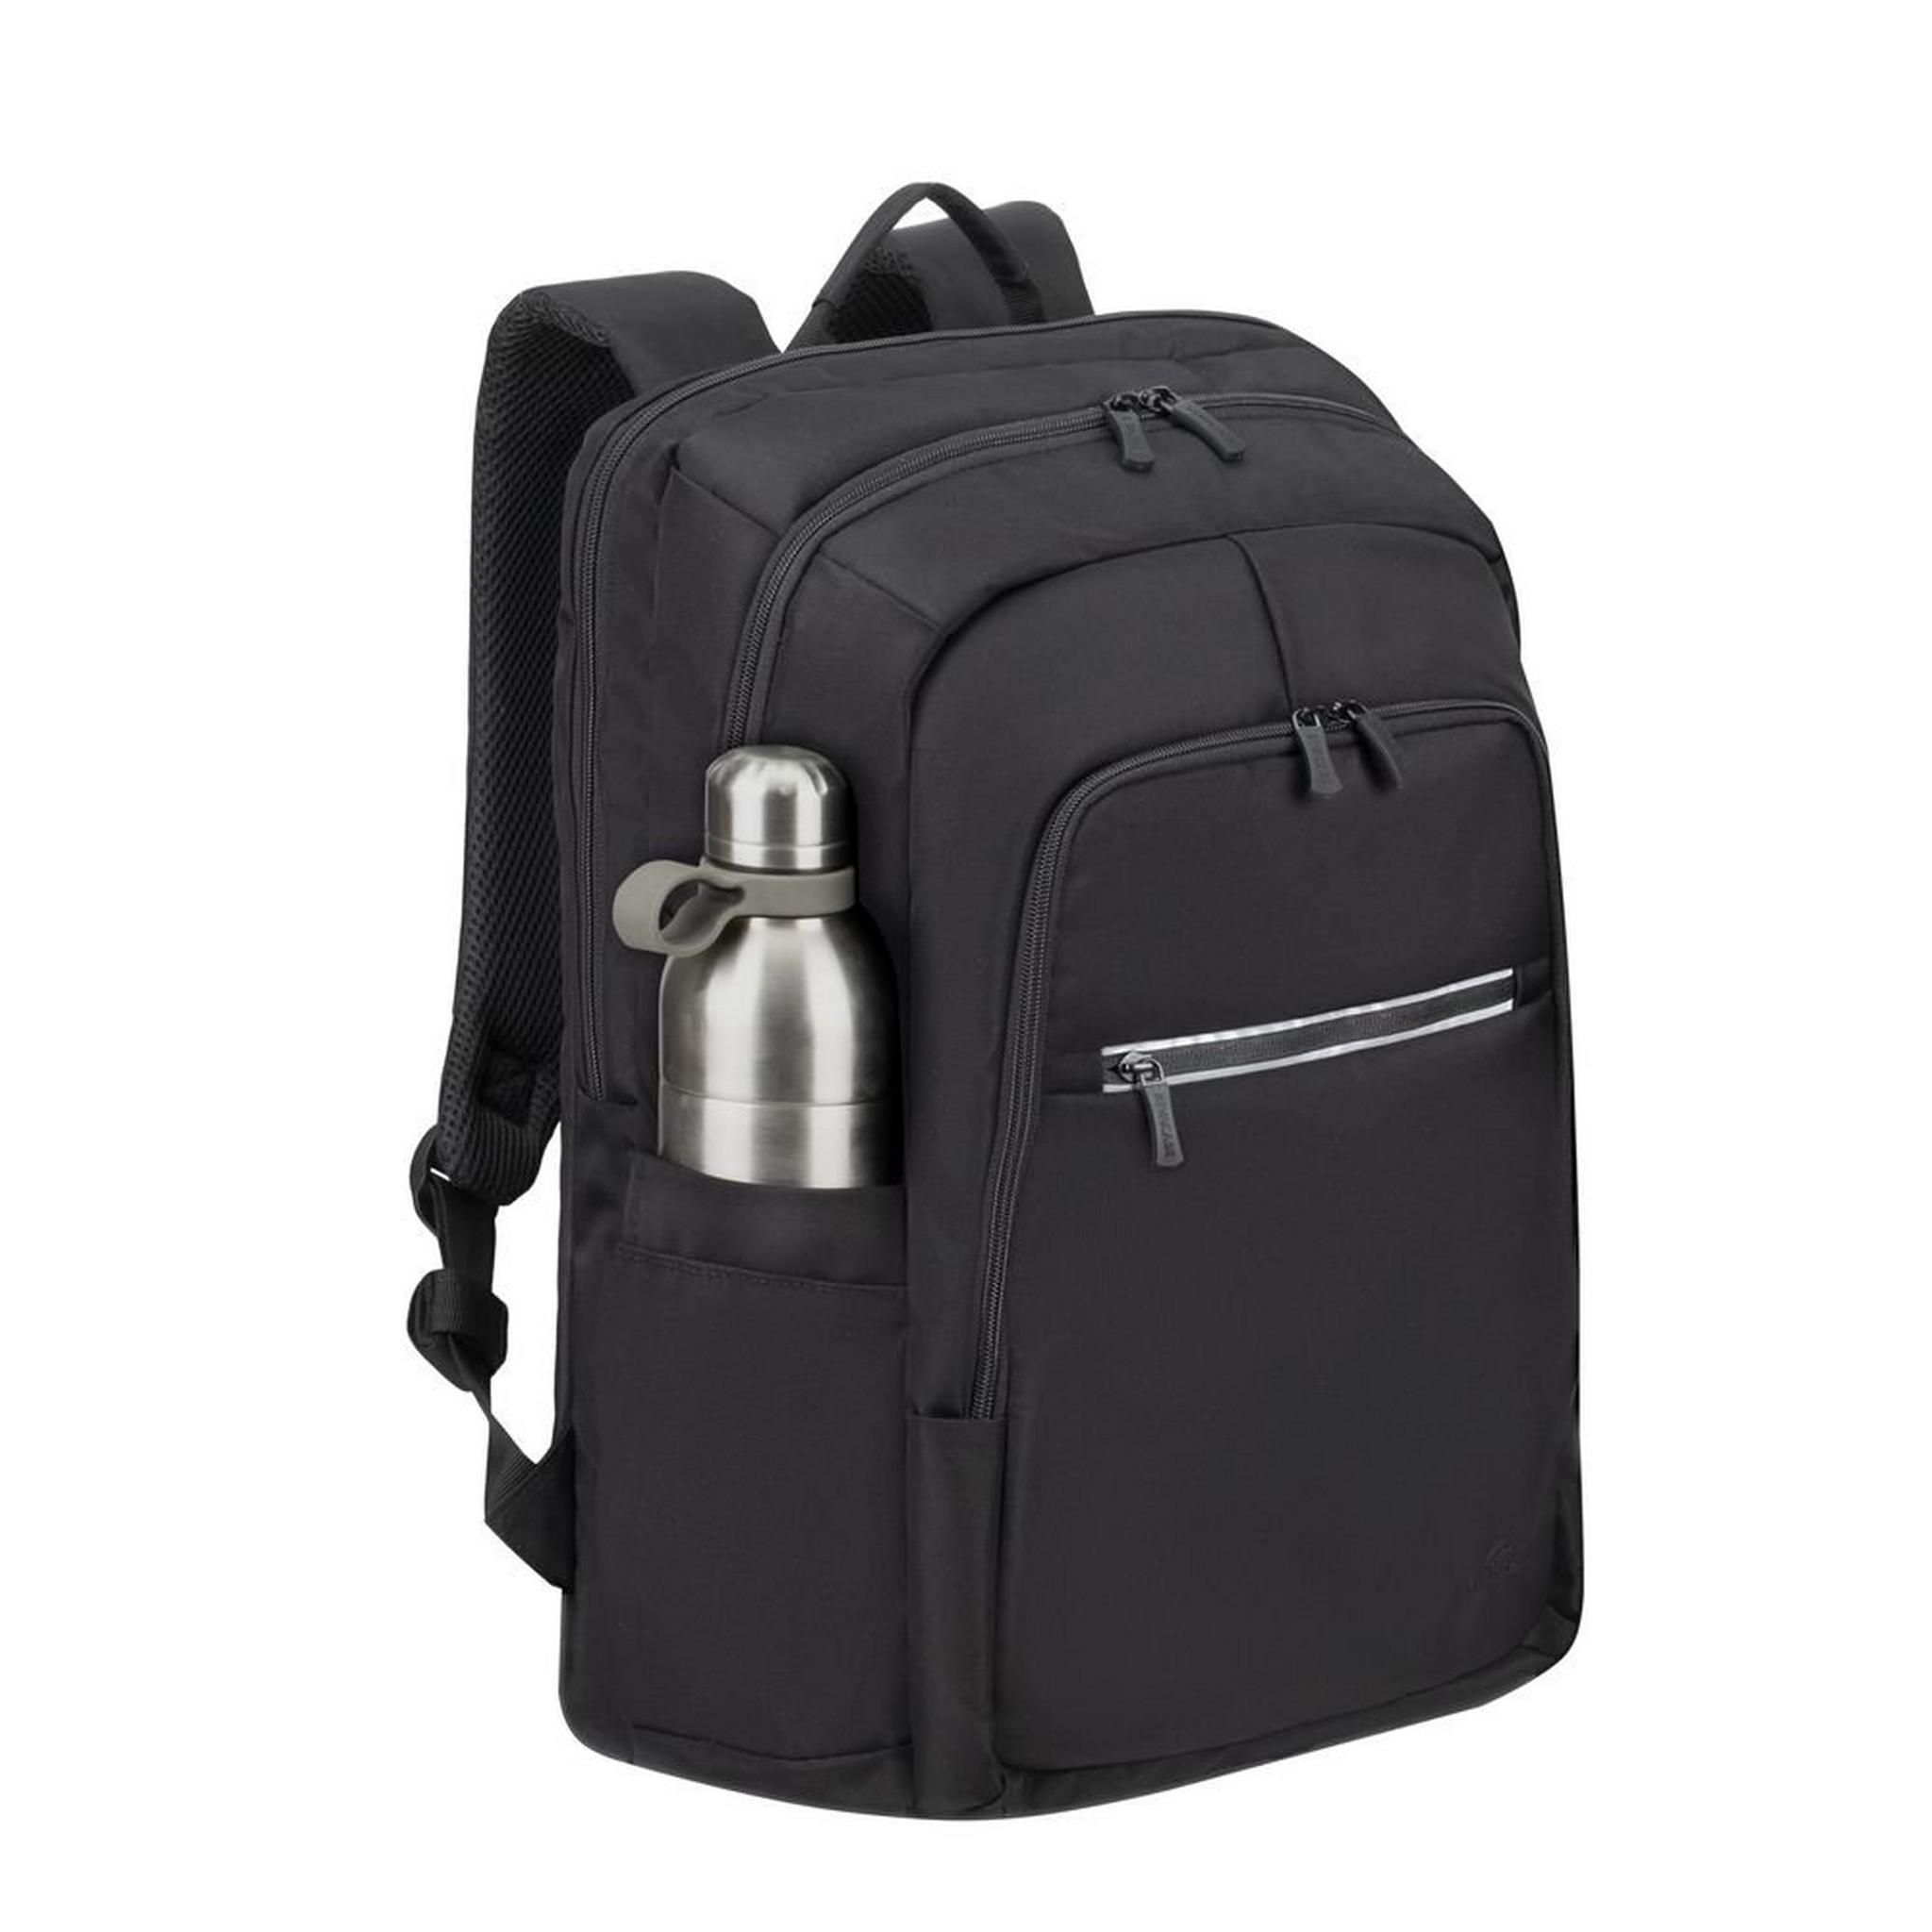 RIVA Alpendorf Eco 7569 Laptop Backpack, 17.3-inch - Black